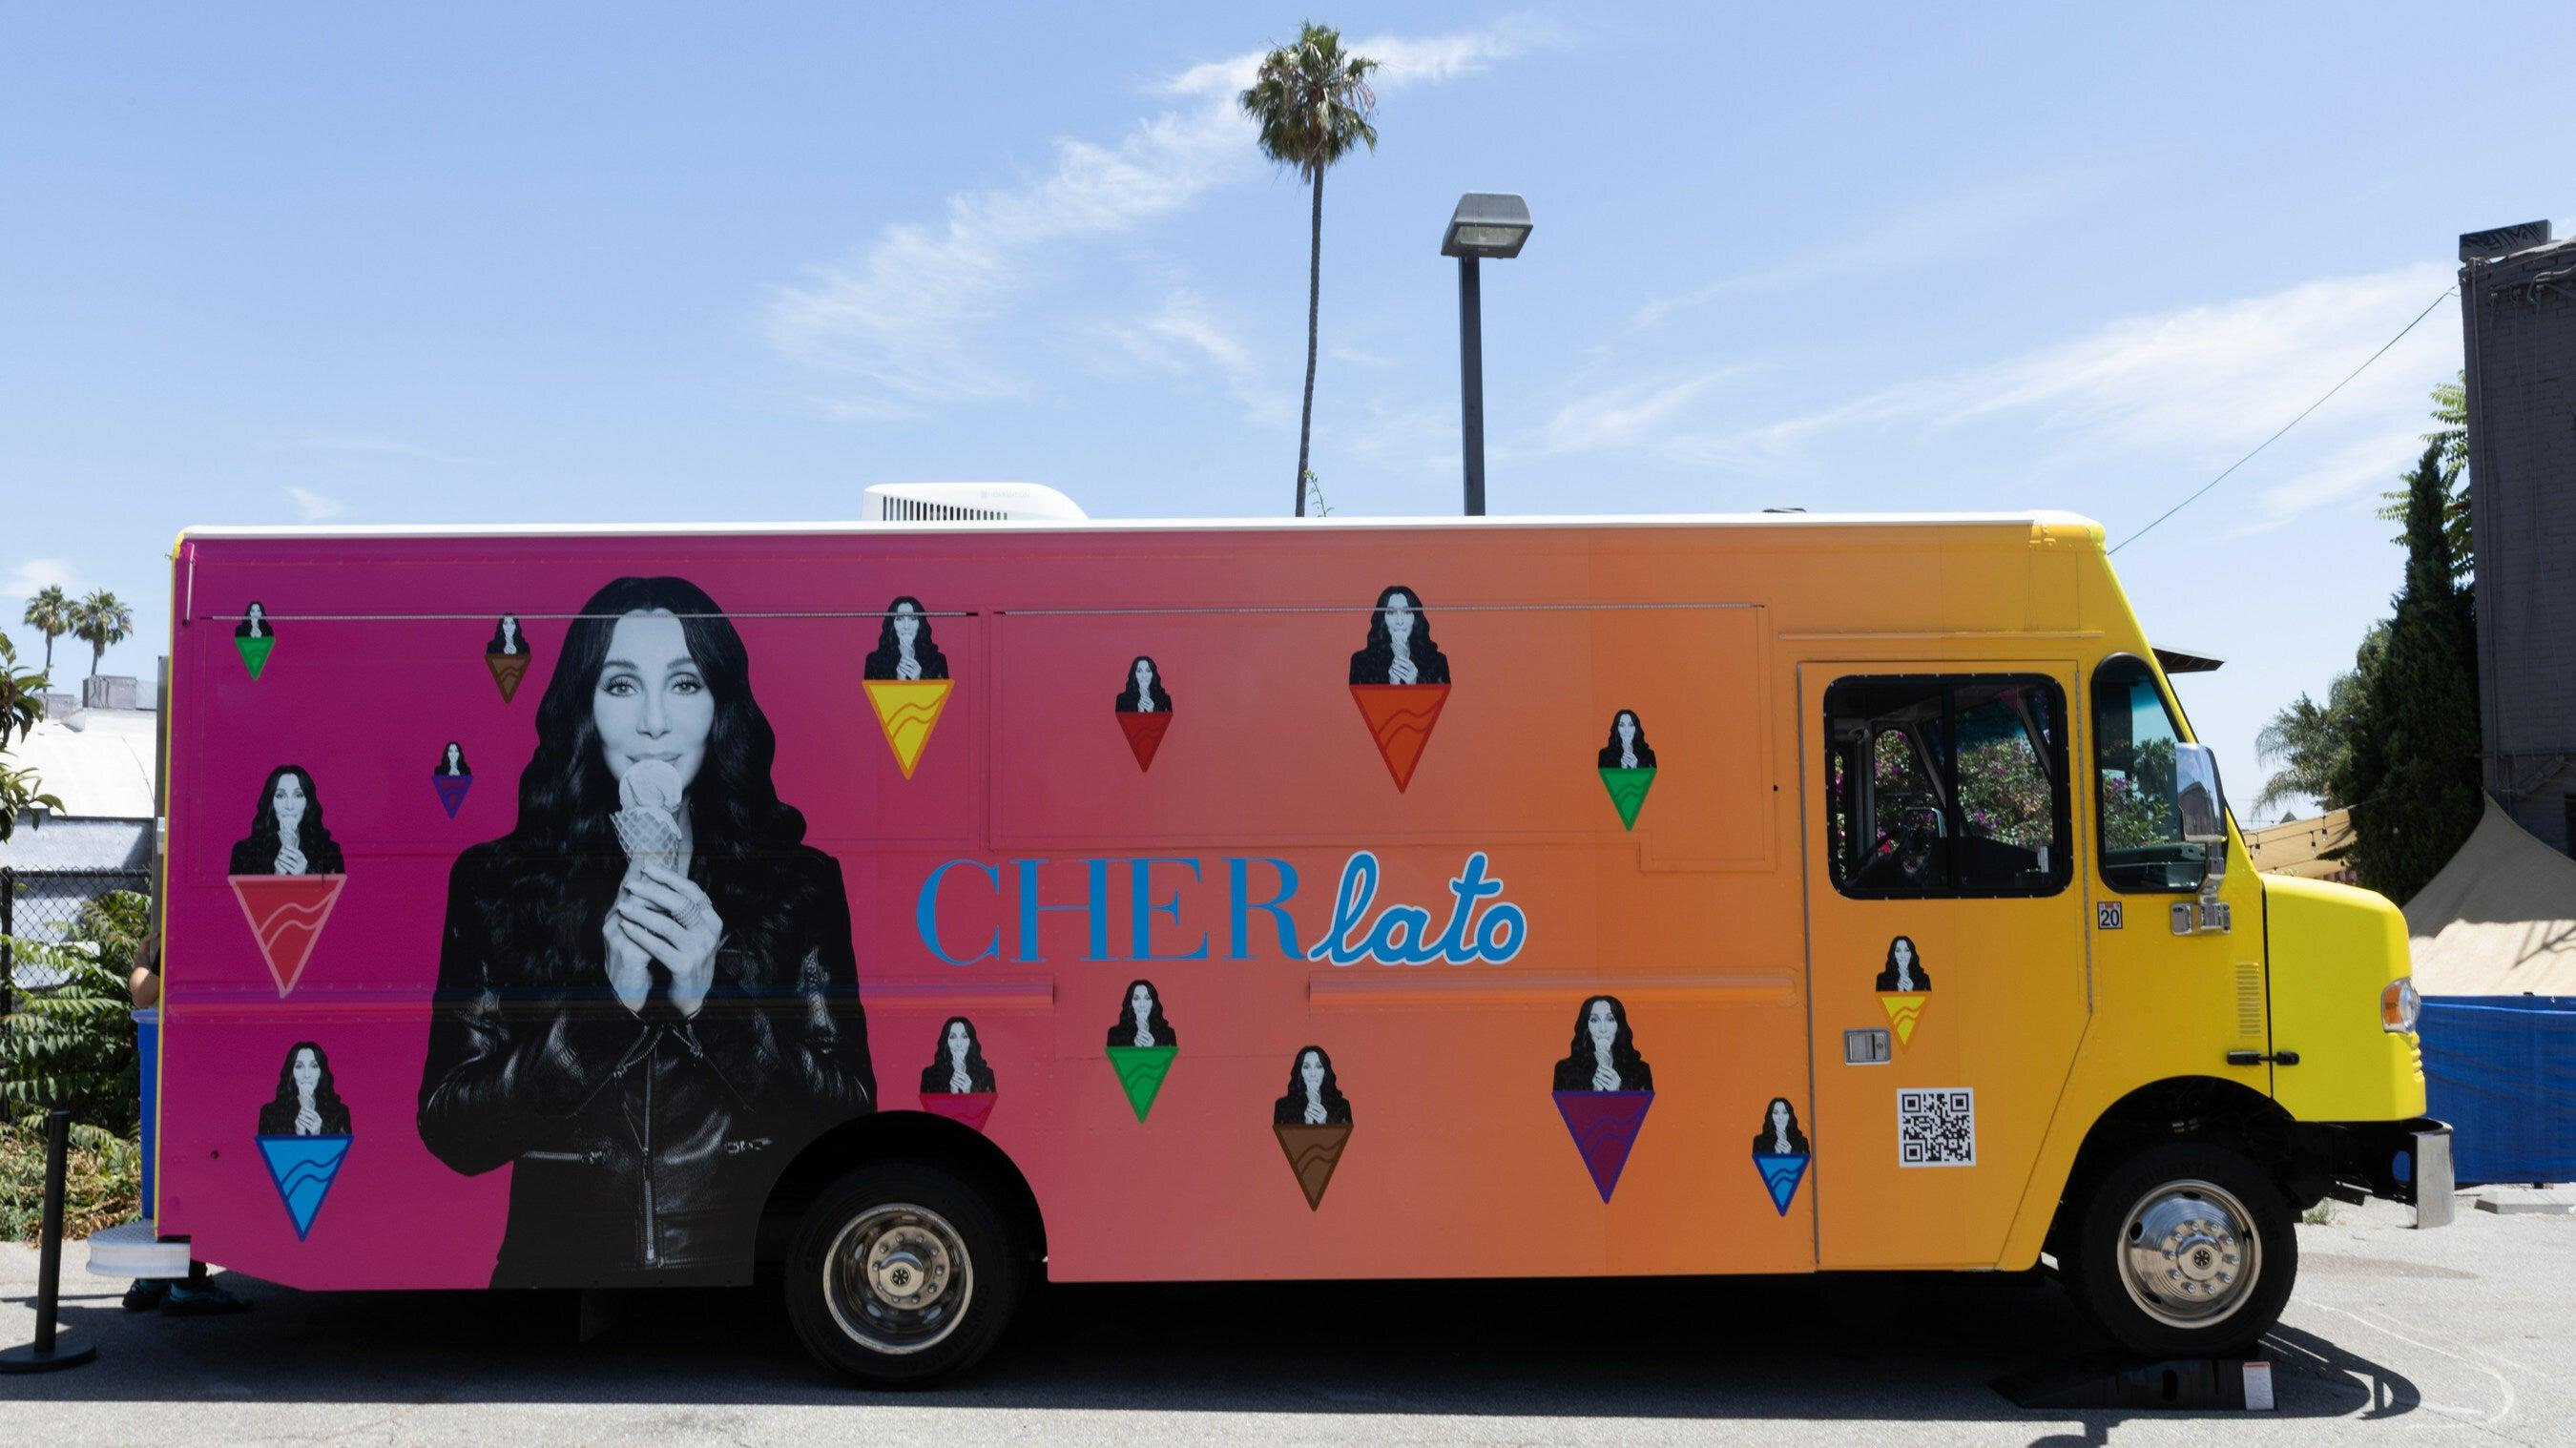 Cherlato branded gelato truck in Los Angeles